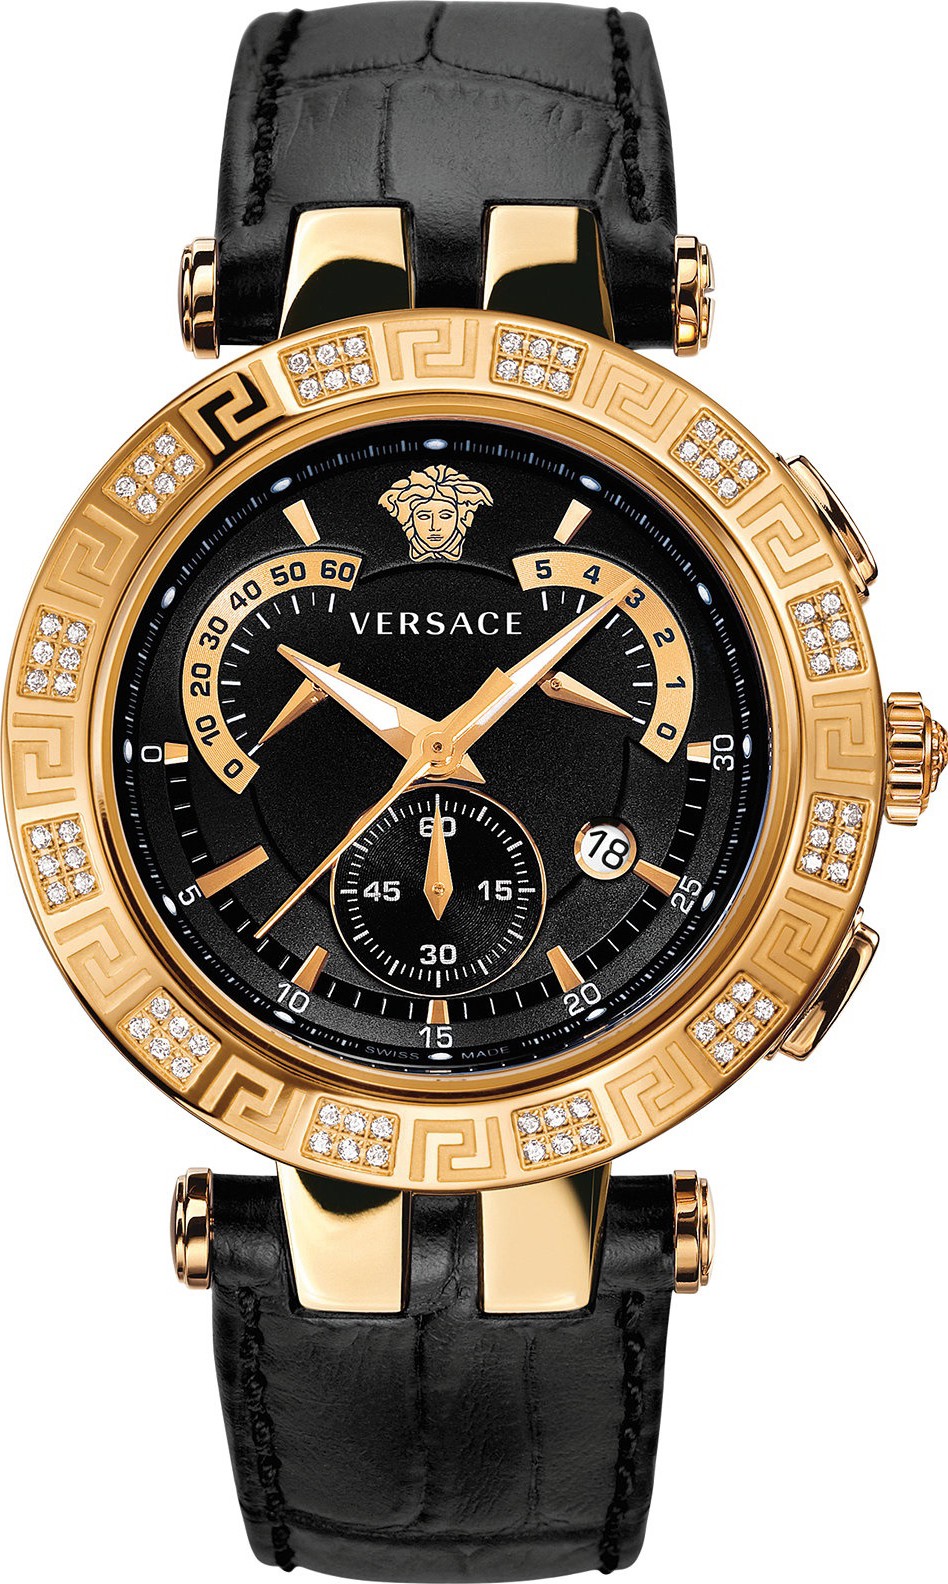 Đồng hồ Versace V-Race 23C82D008 S009 Watch 42mm